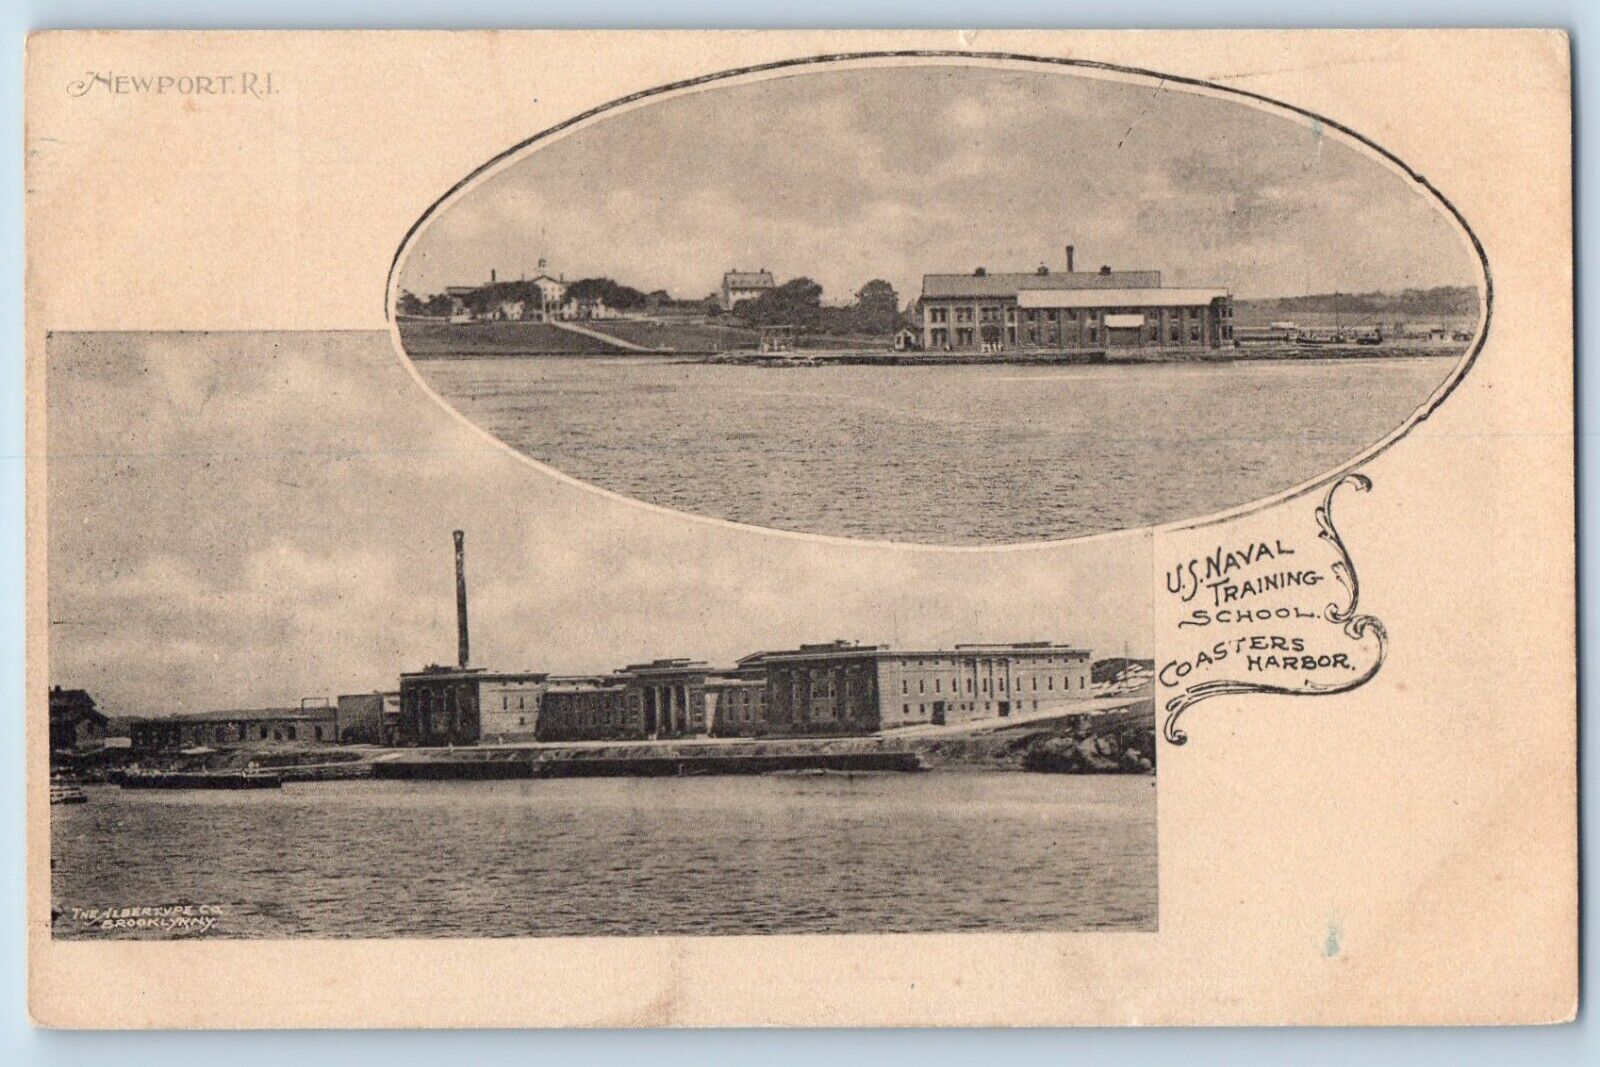 Newport Rhode Island RI Postcard US Naval Training School Coaster Harbor c1905